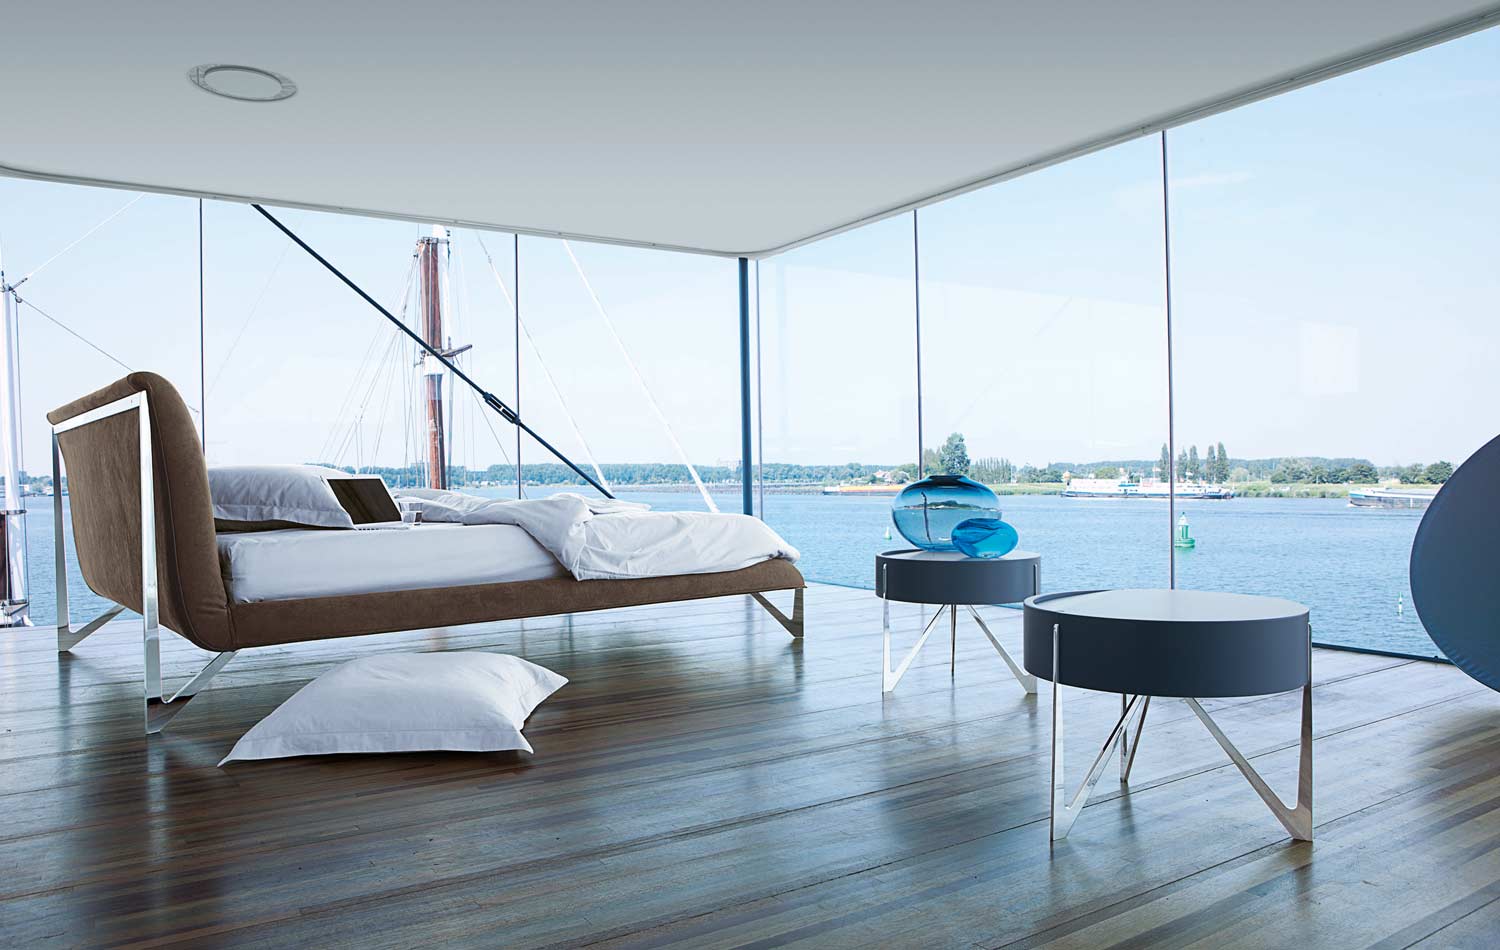 bedroom modern roche bobois interior bedrooms glass wall beds luminous panoramic designs inspiring ocean views beautiful windows ceiling floor bed